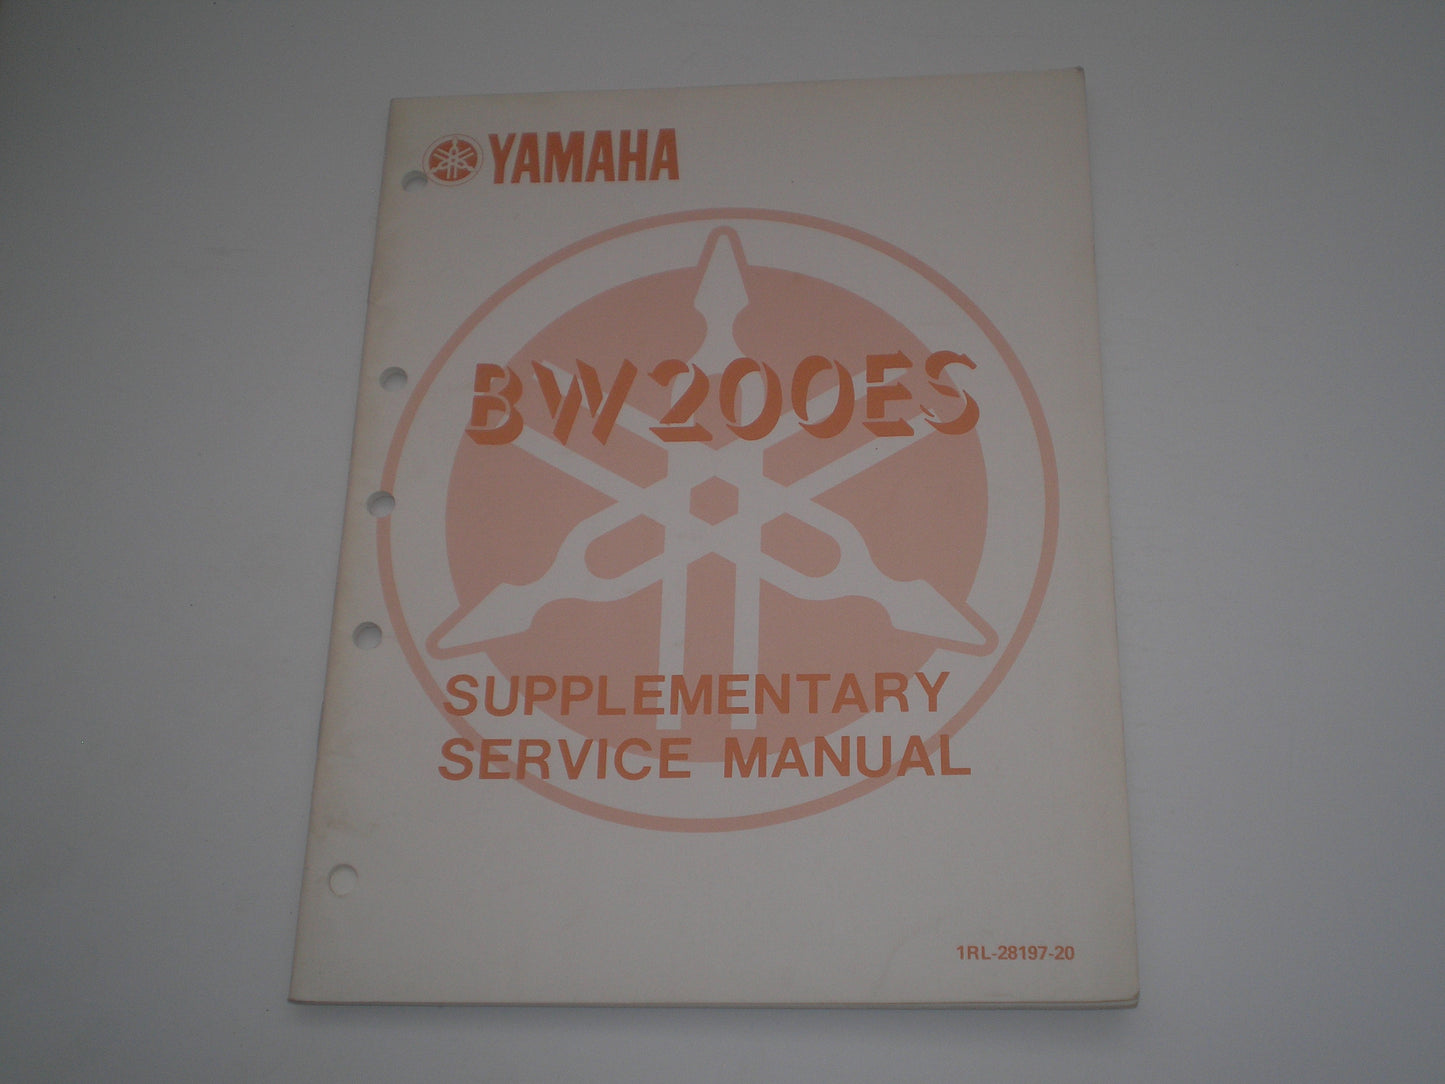 YAMAHA BW200 ES  Big Wheel Electric Start  1986  Service Manual Supplement  1RL-28197-20  #1617